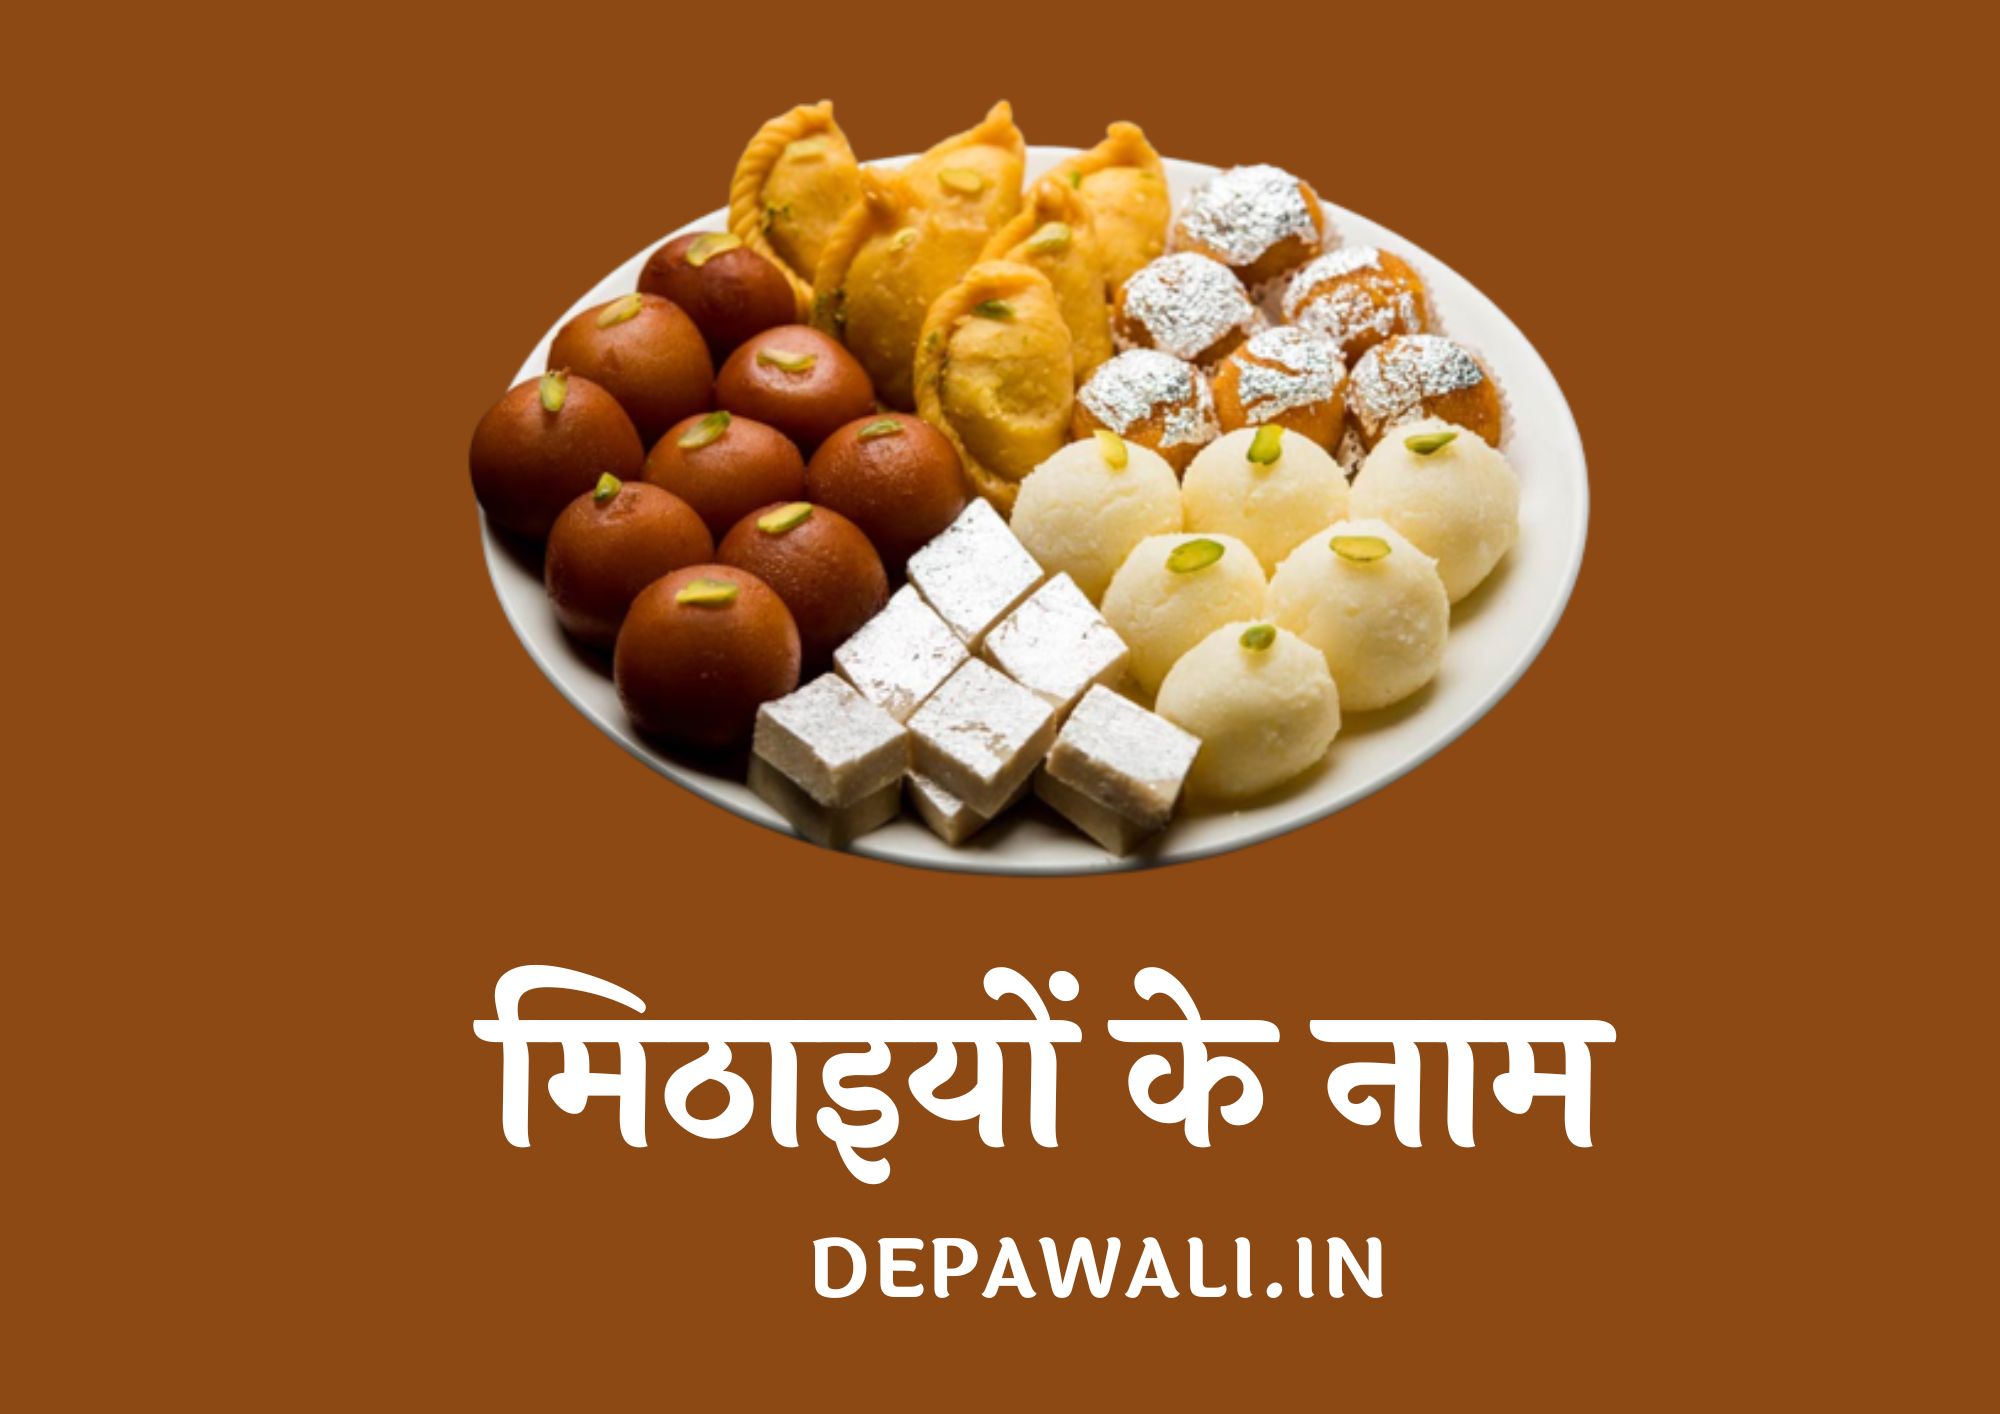 100 मिठाइयों के नाम (भारतीय मिठाइयों के नाम) - Mithaiyon Ke Naam Hindi Mein | 100 Sweets Name In Hindi And English